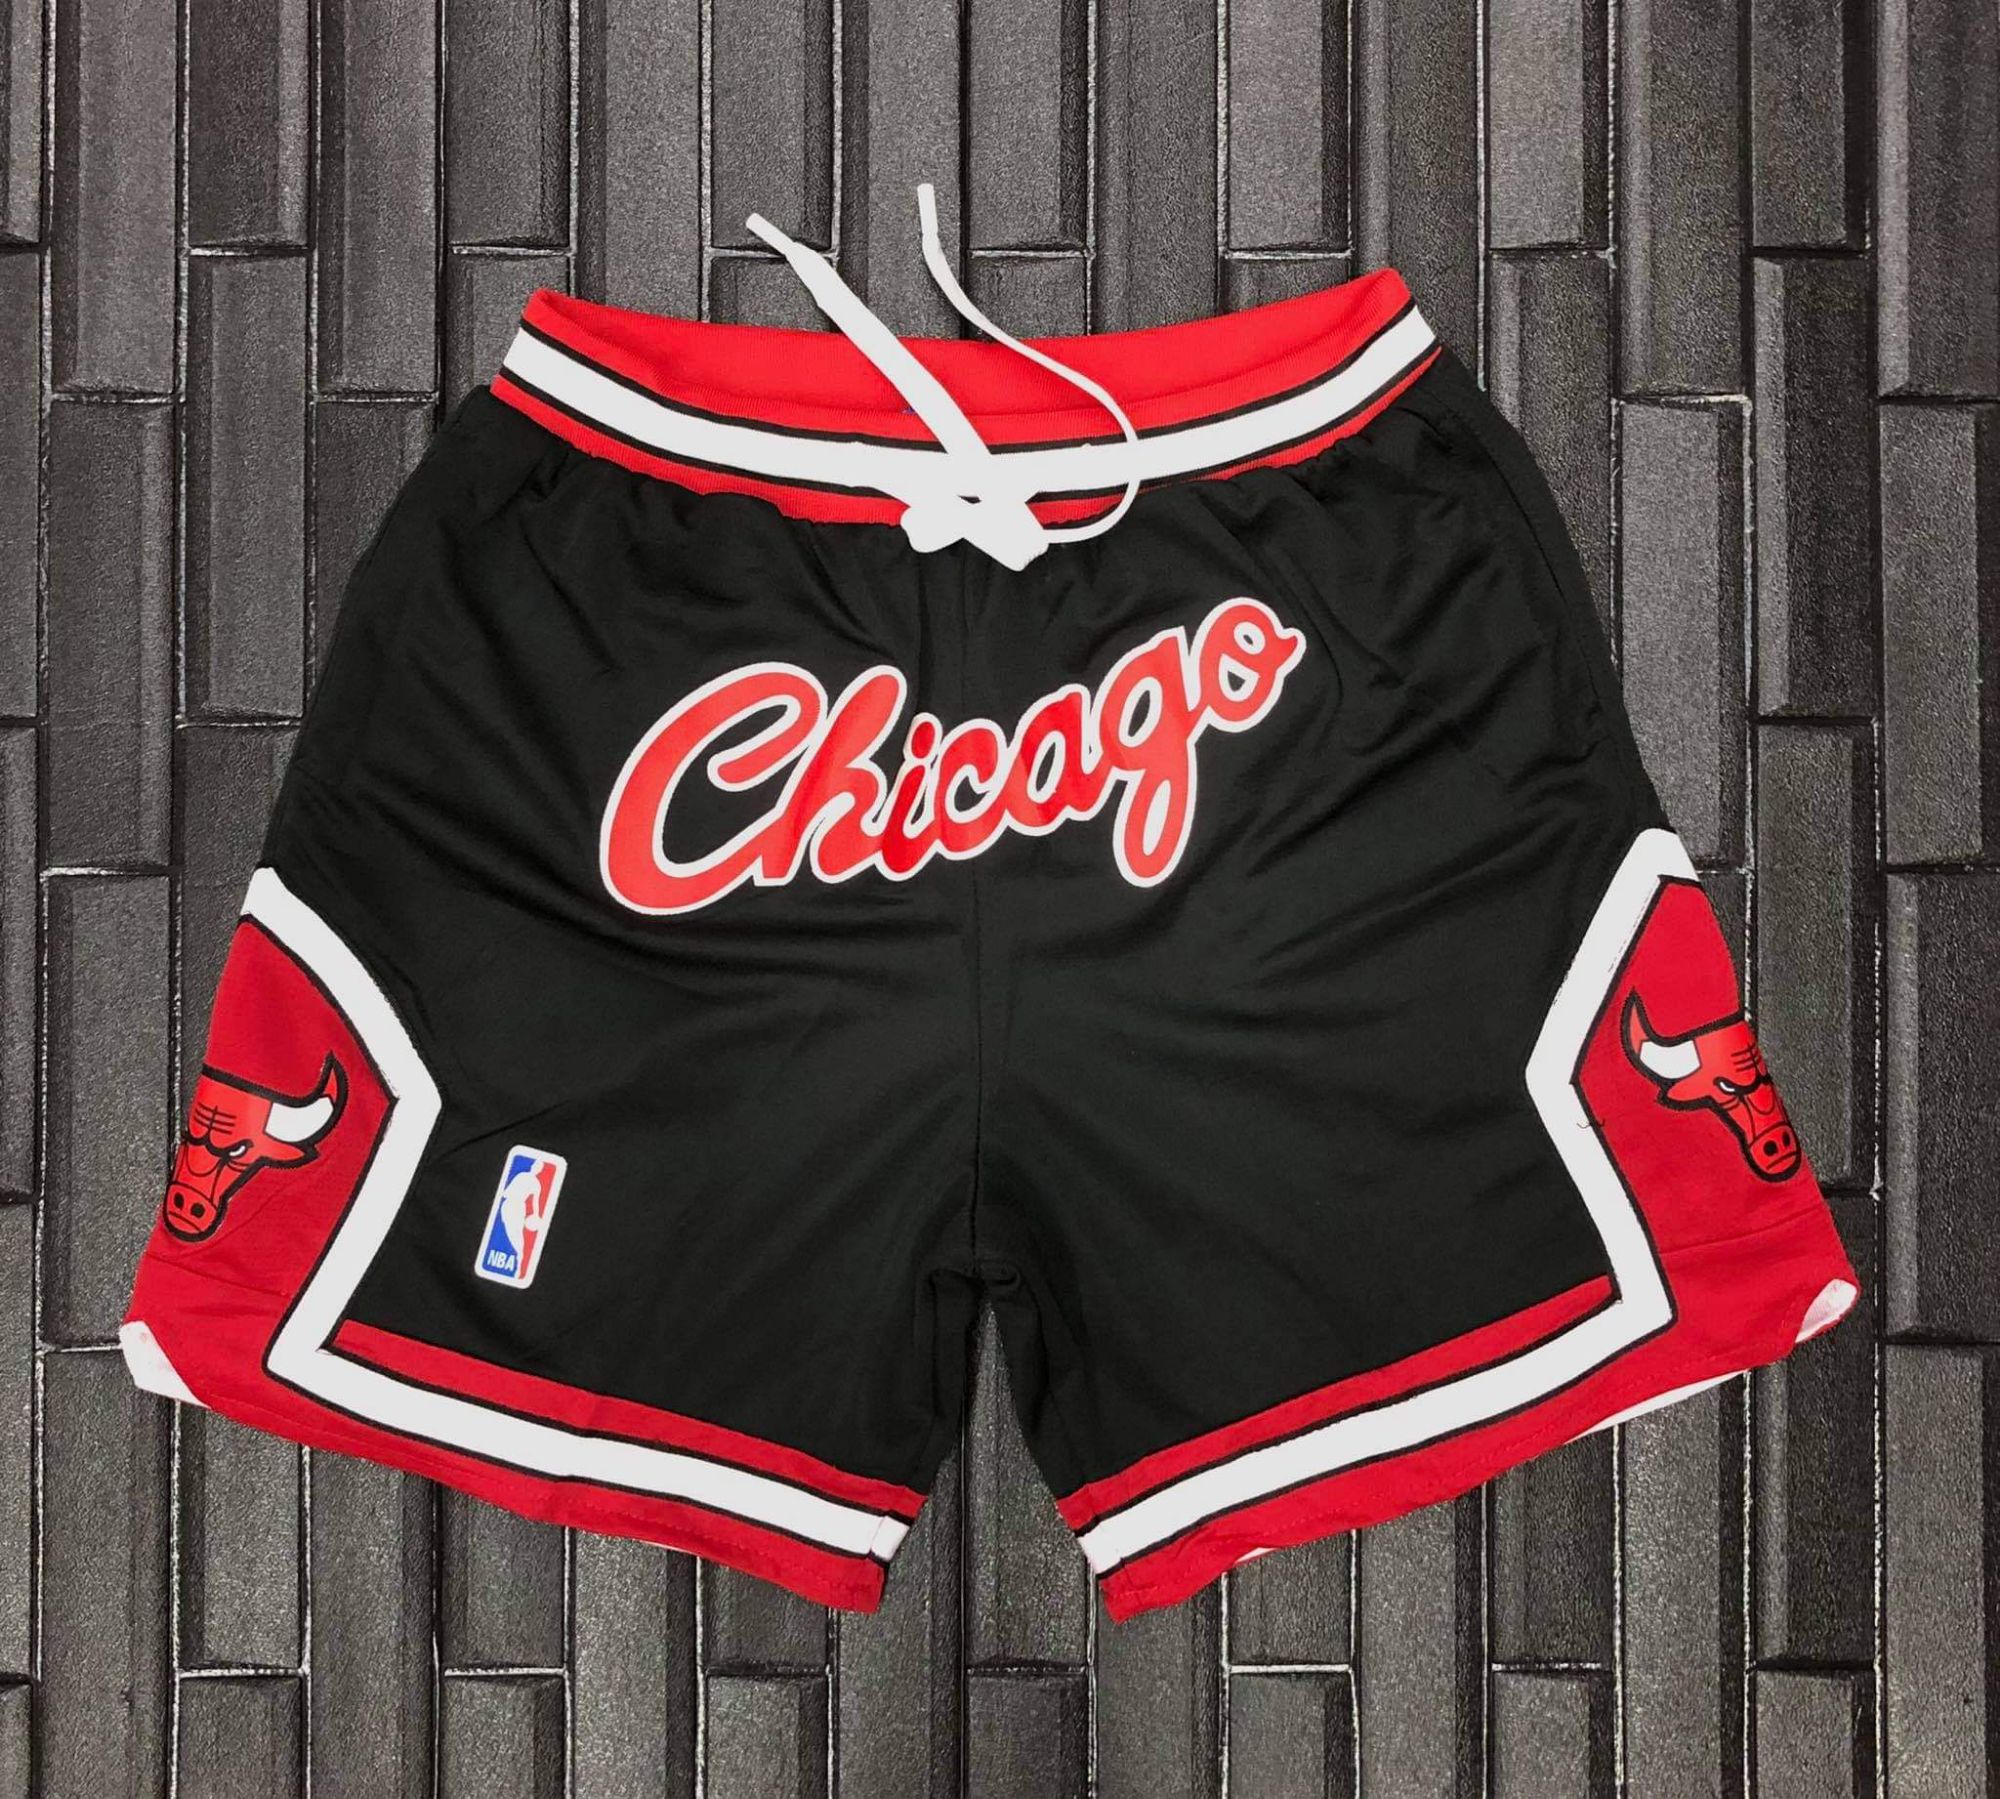 Retro Chicago Bulls Basketball Shorts Men's Pants Vintage Jersey Stitched 